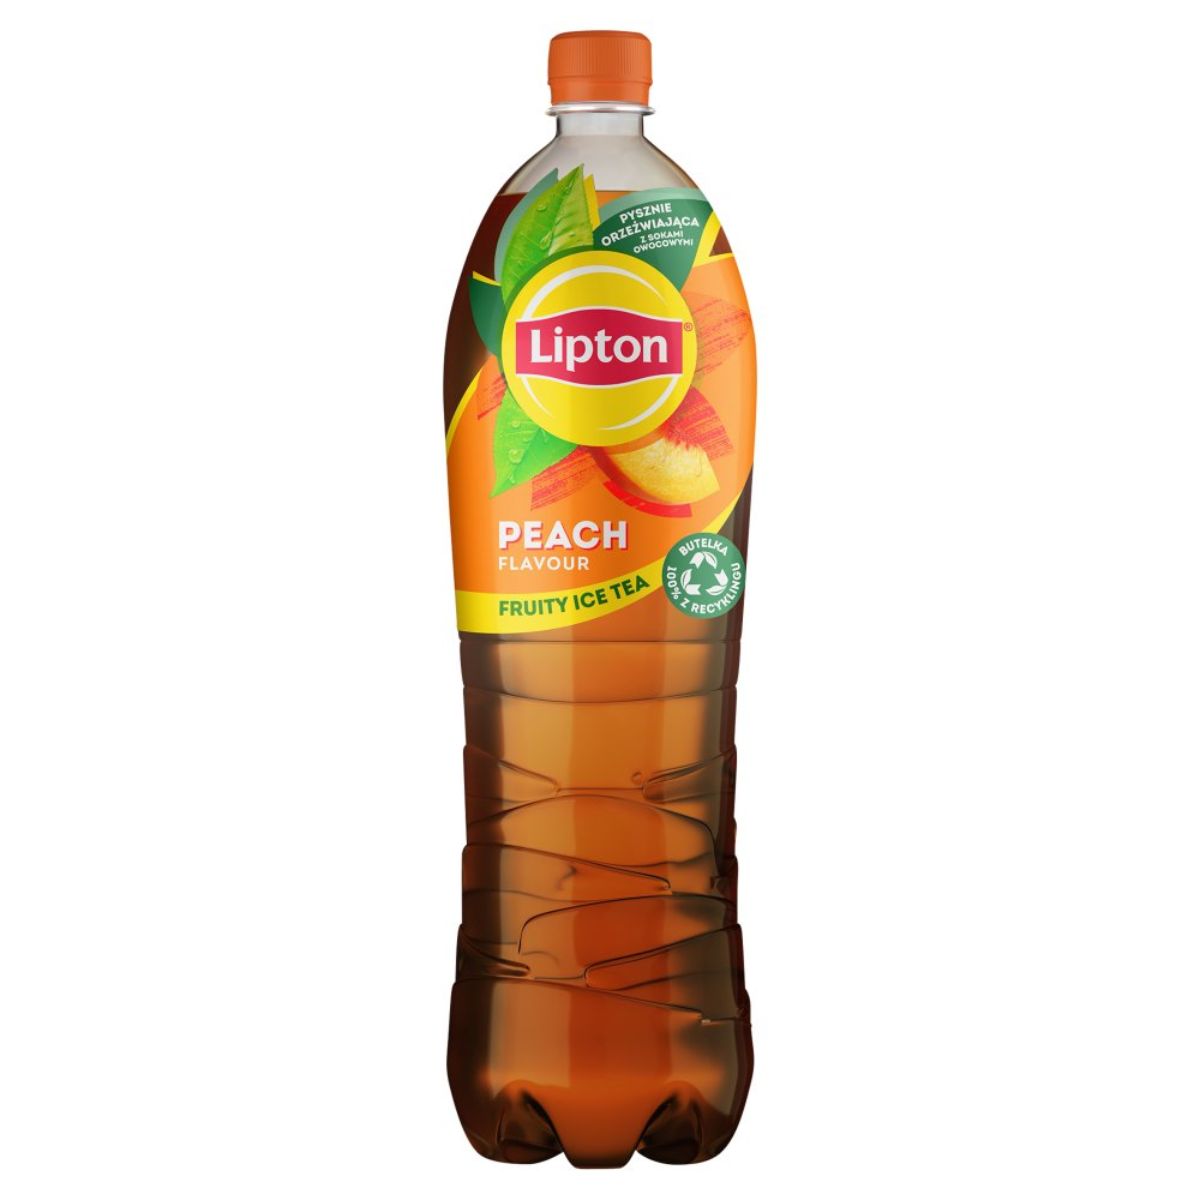 A bottle of Lipton - Peach Ice Tea - 1.5L on a white background.